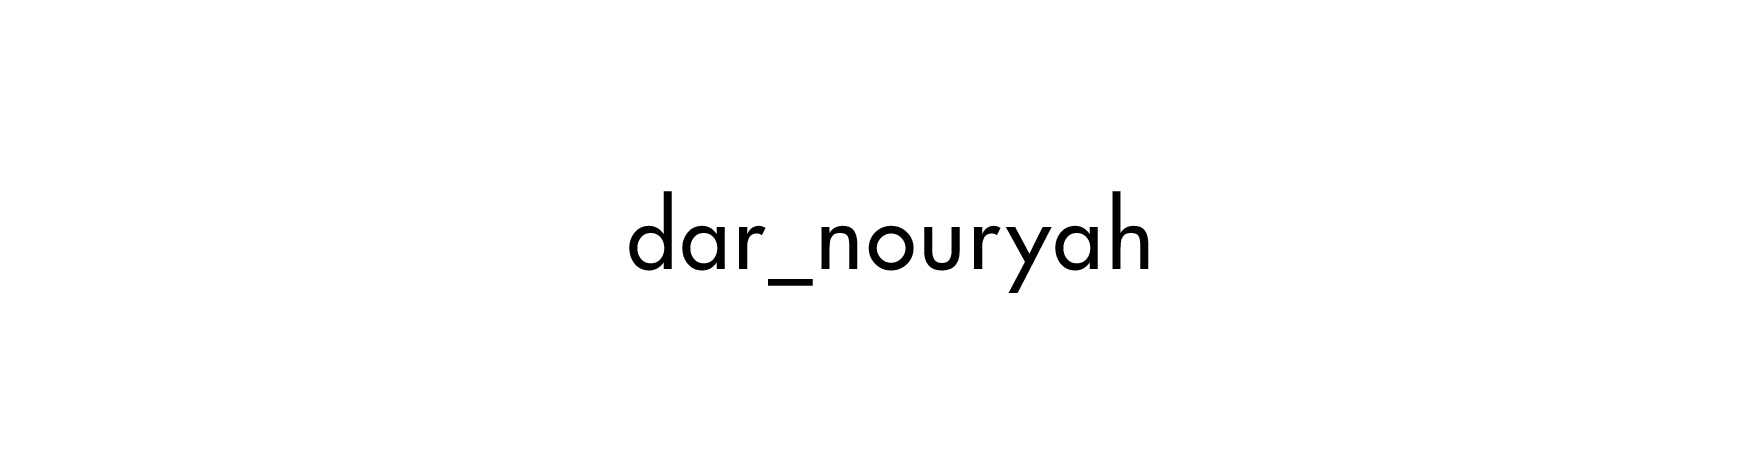 dar_nouryah